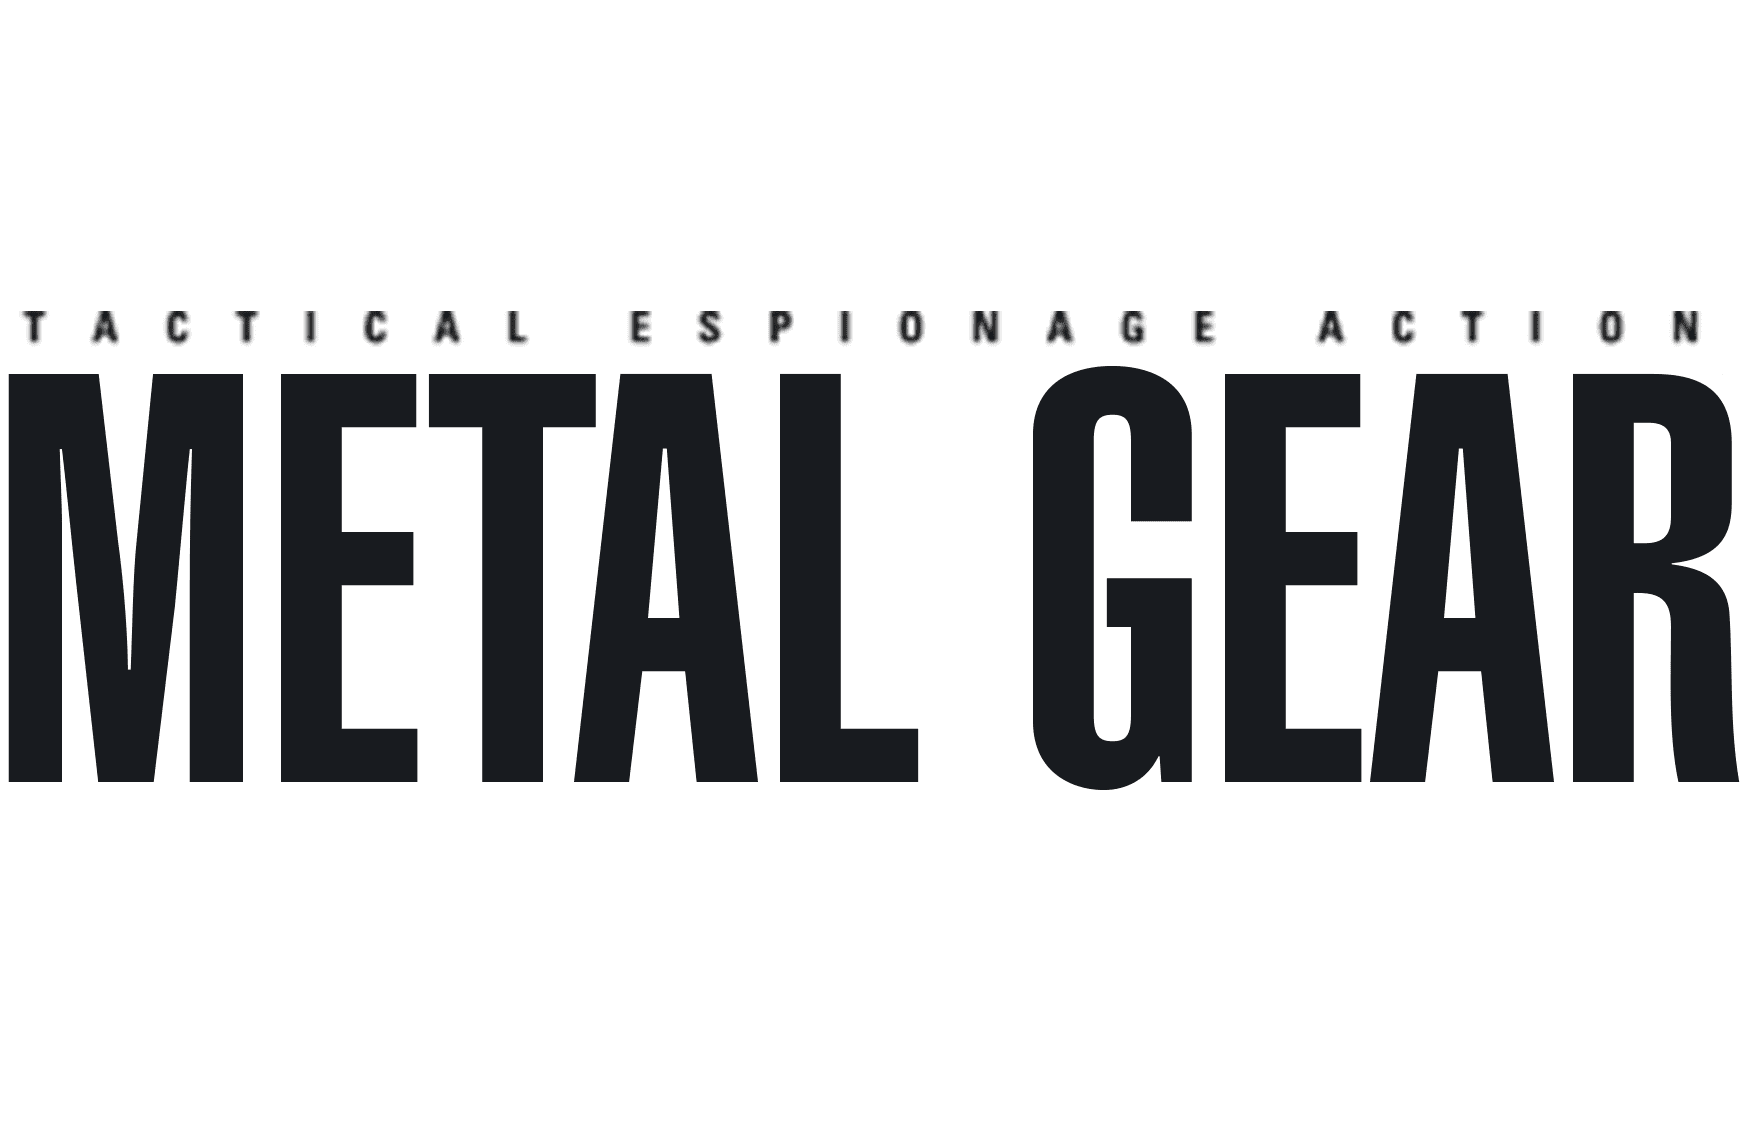 Gear Logo Png